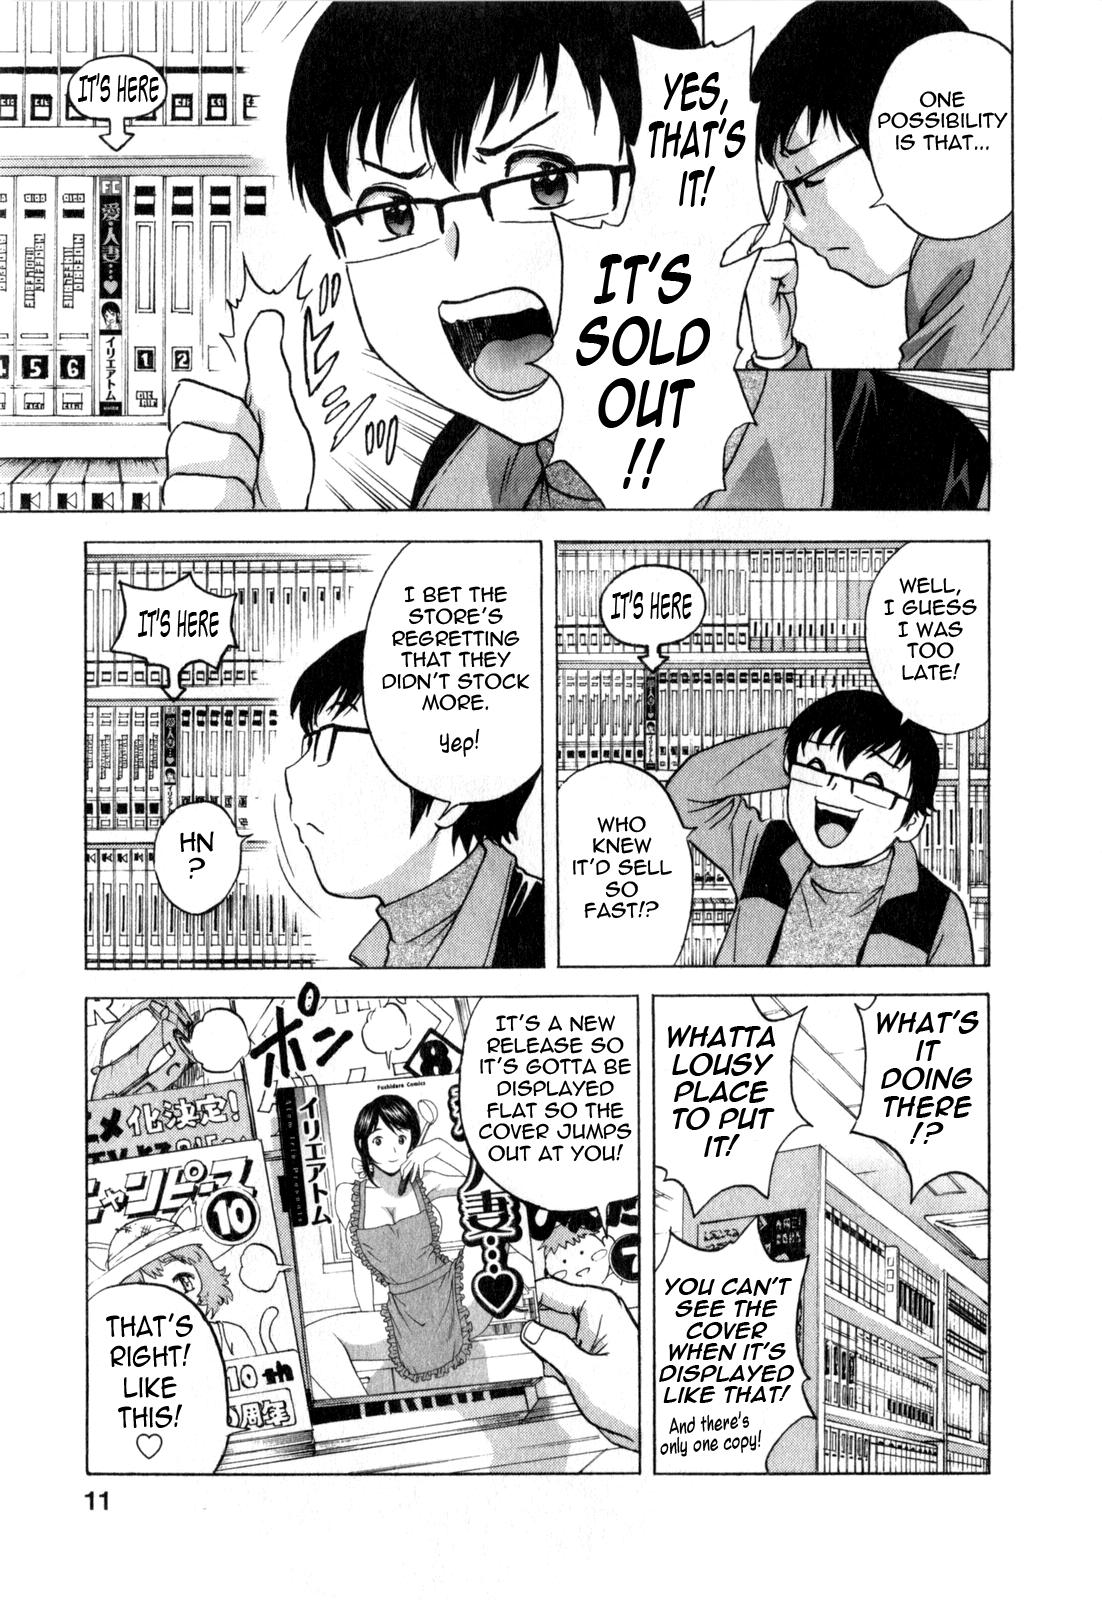 [Hidemaru] Life with Married Women Just Like a Manga 3 - Ch. 1-8 [English] {Tadanohito} 12